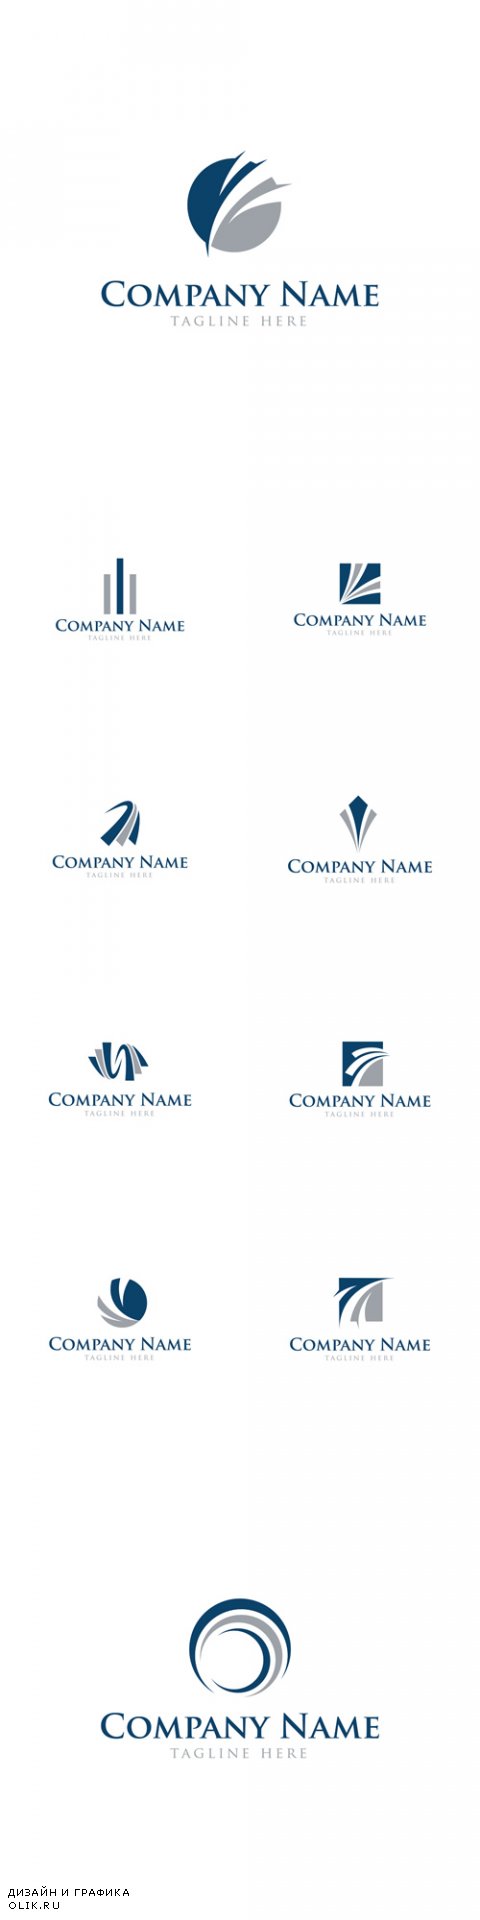 Vector Abstract Business Finance Logos